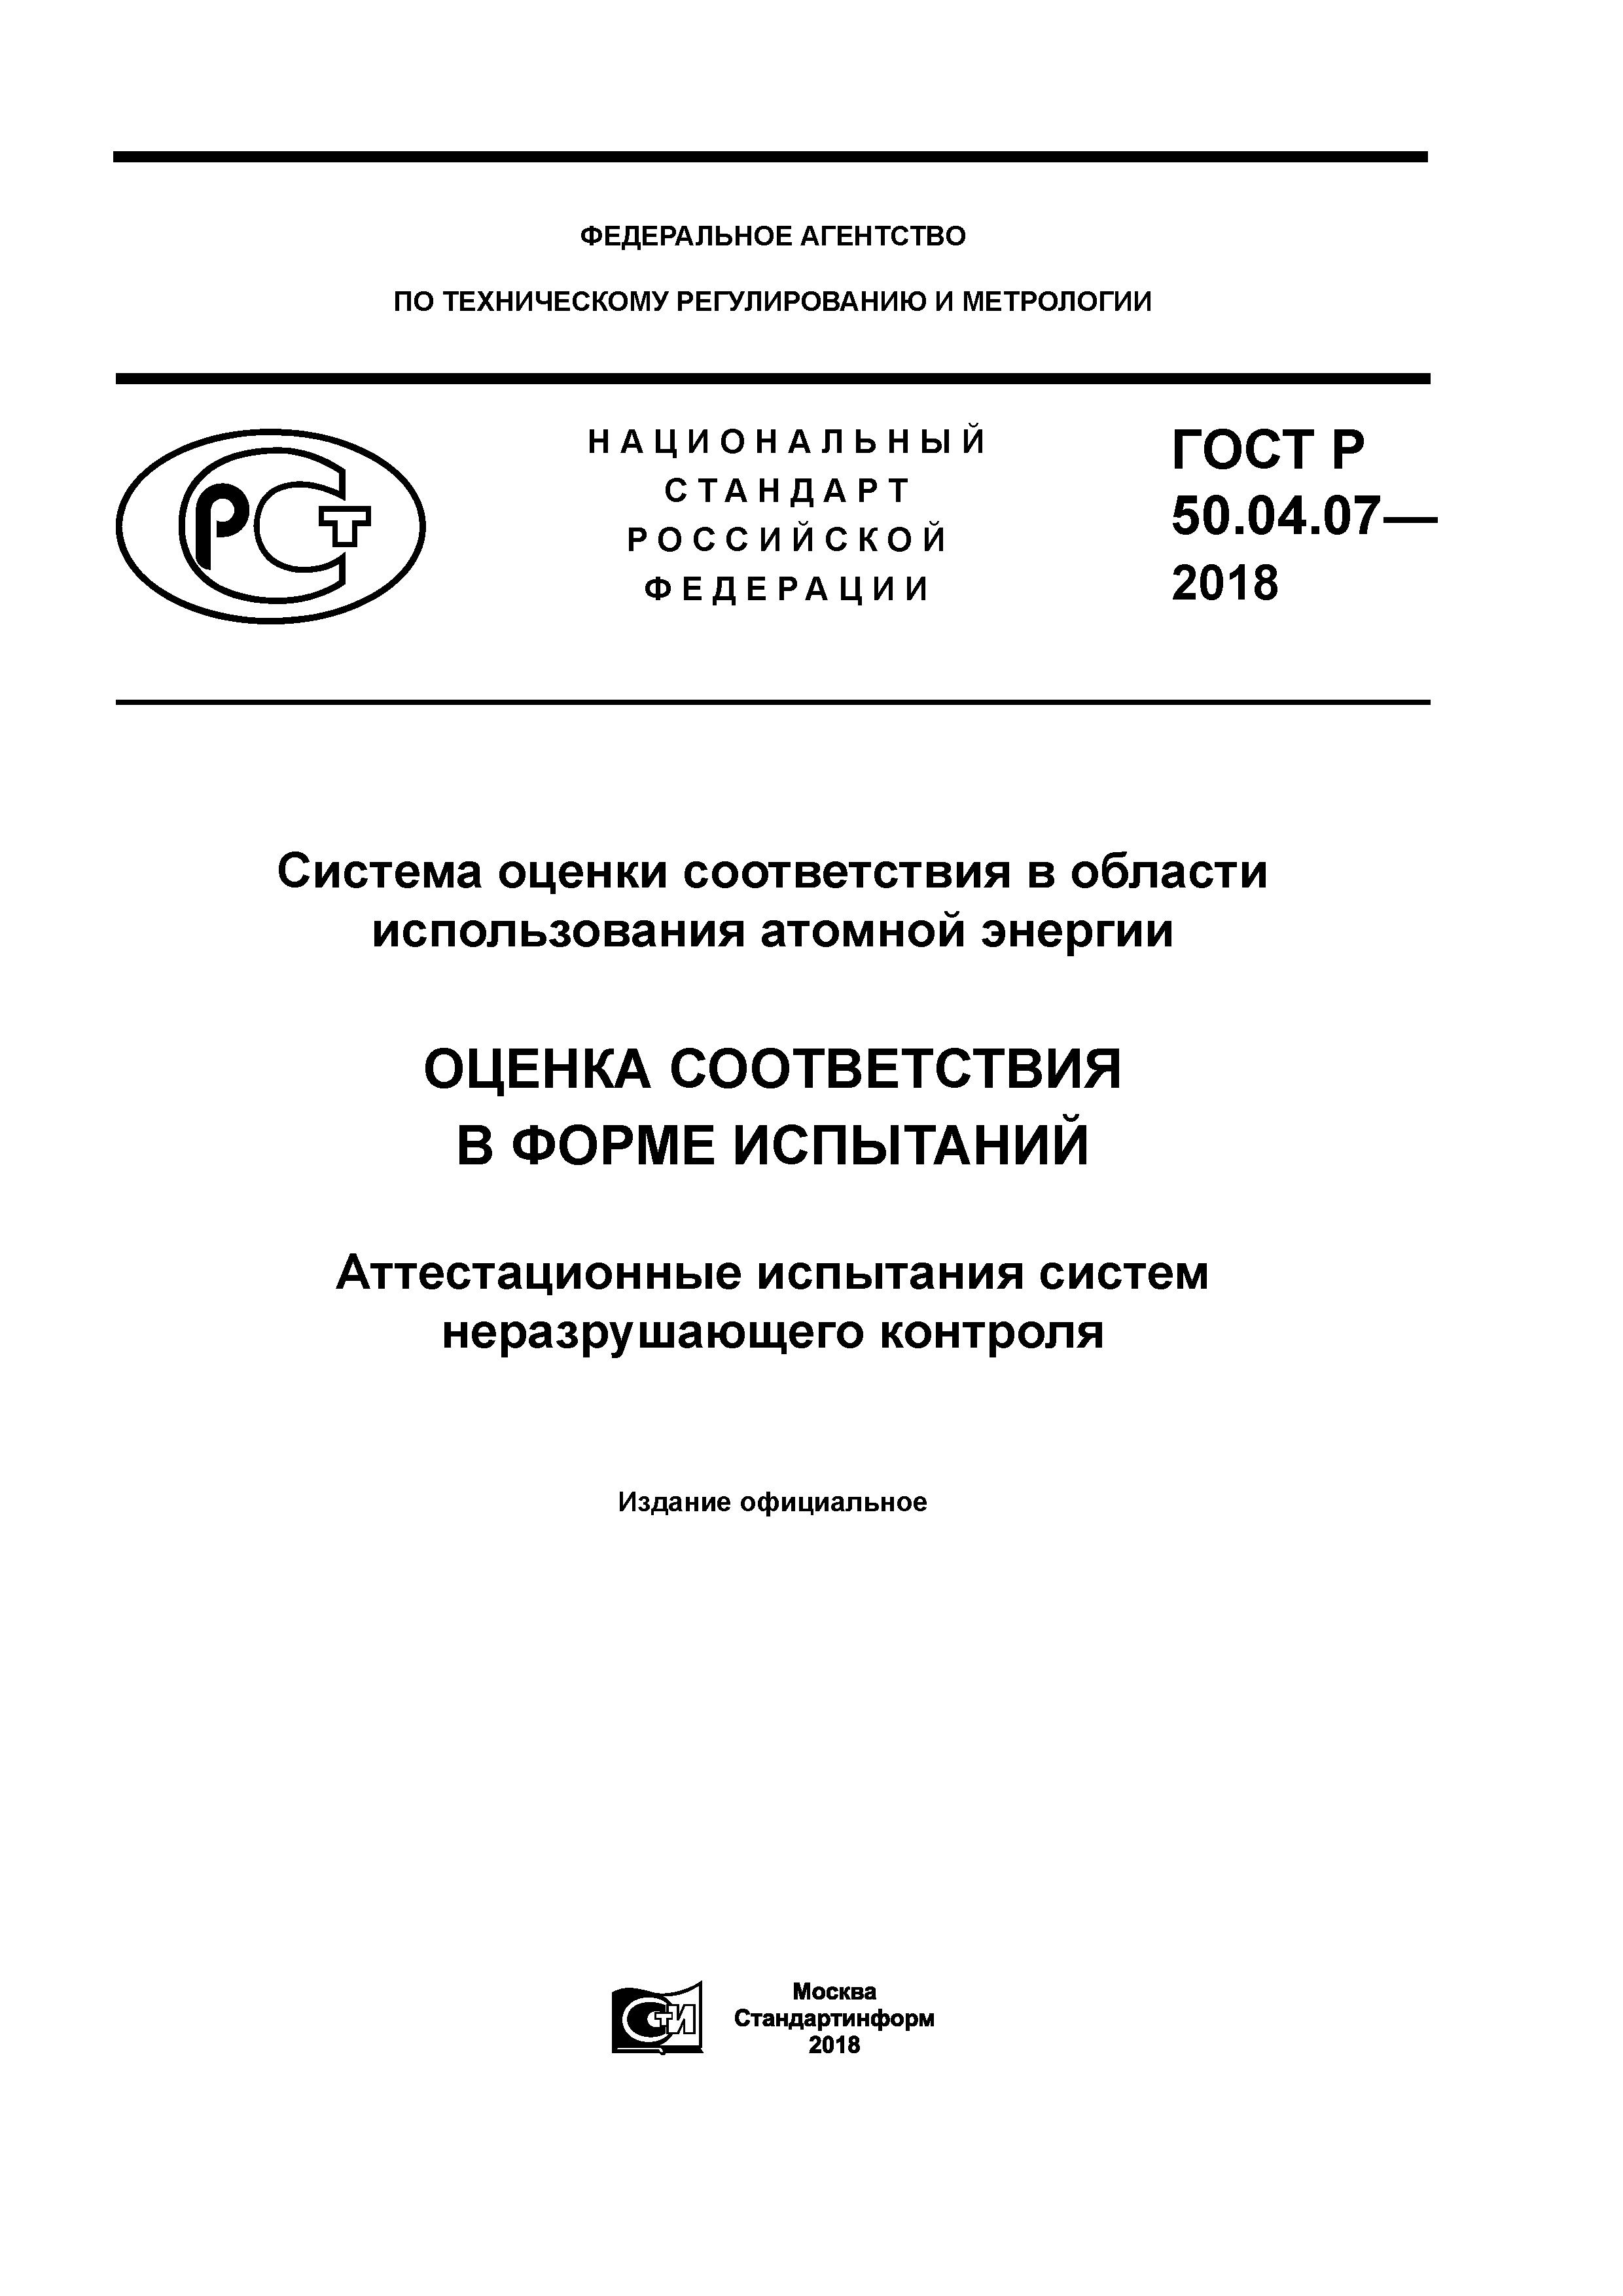 ГОСТ Р 50.04.07-2018